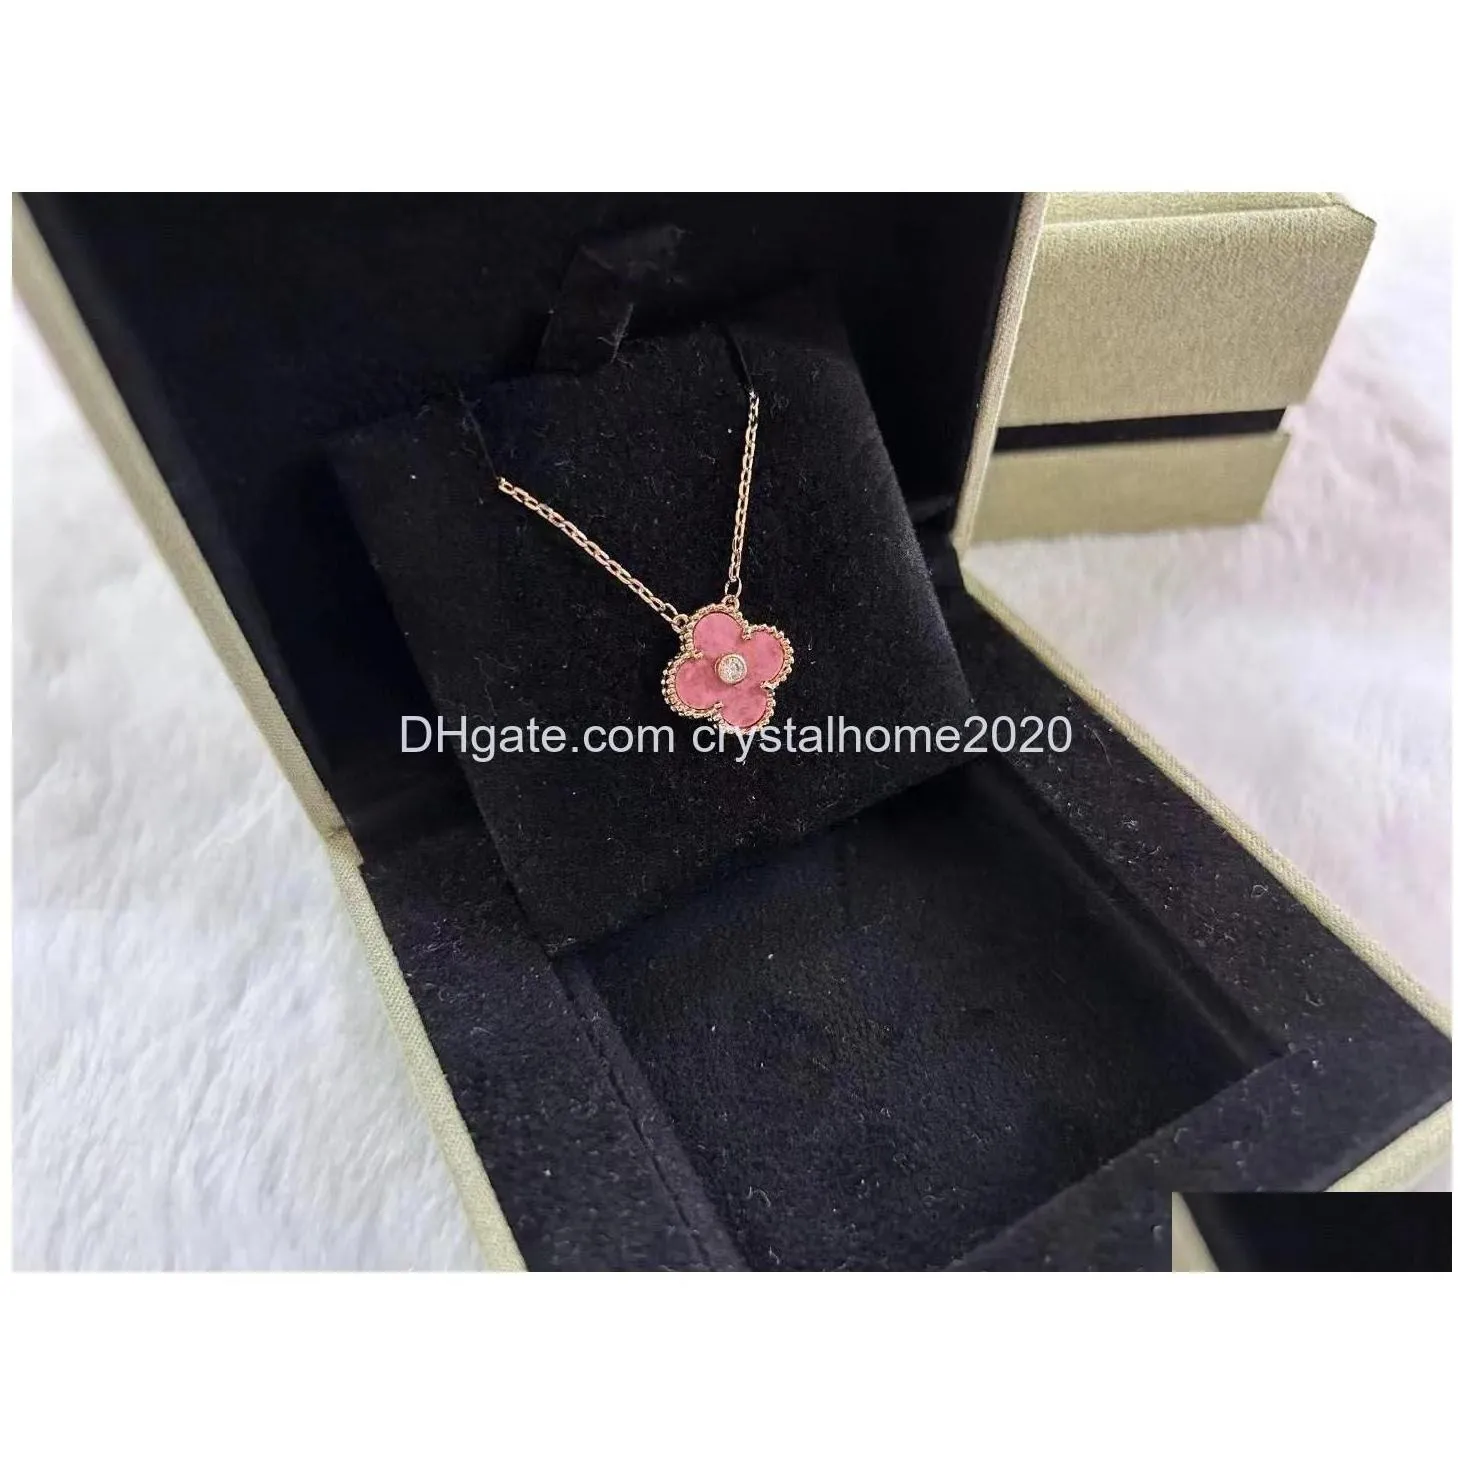 pendant necklaces luxury van esigner 18k gold cross chain rose pink clover 15mm 4 leaf flower choker necklace nice top a drop delive